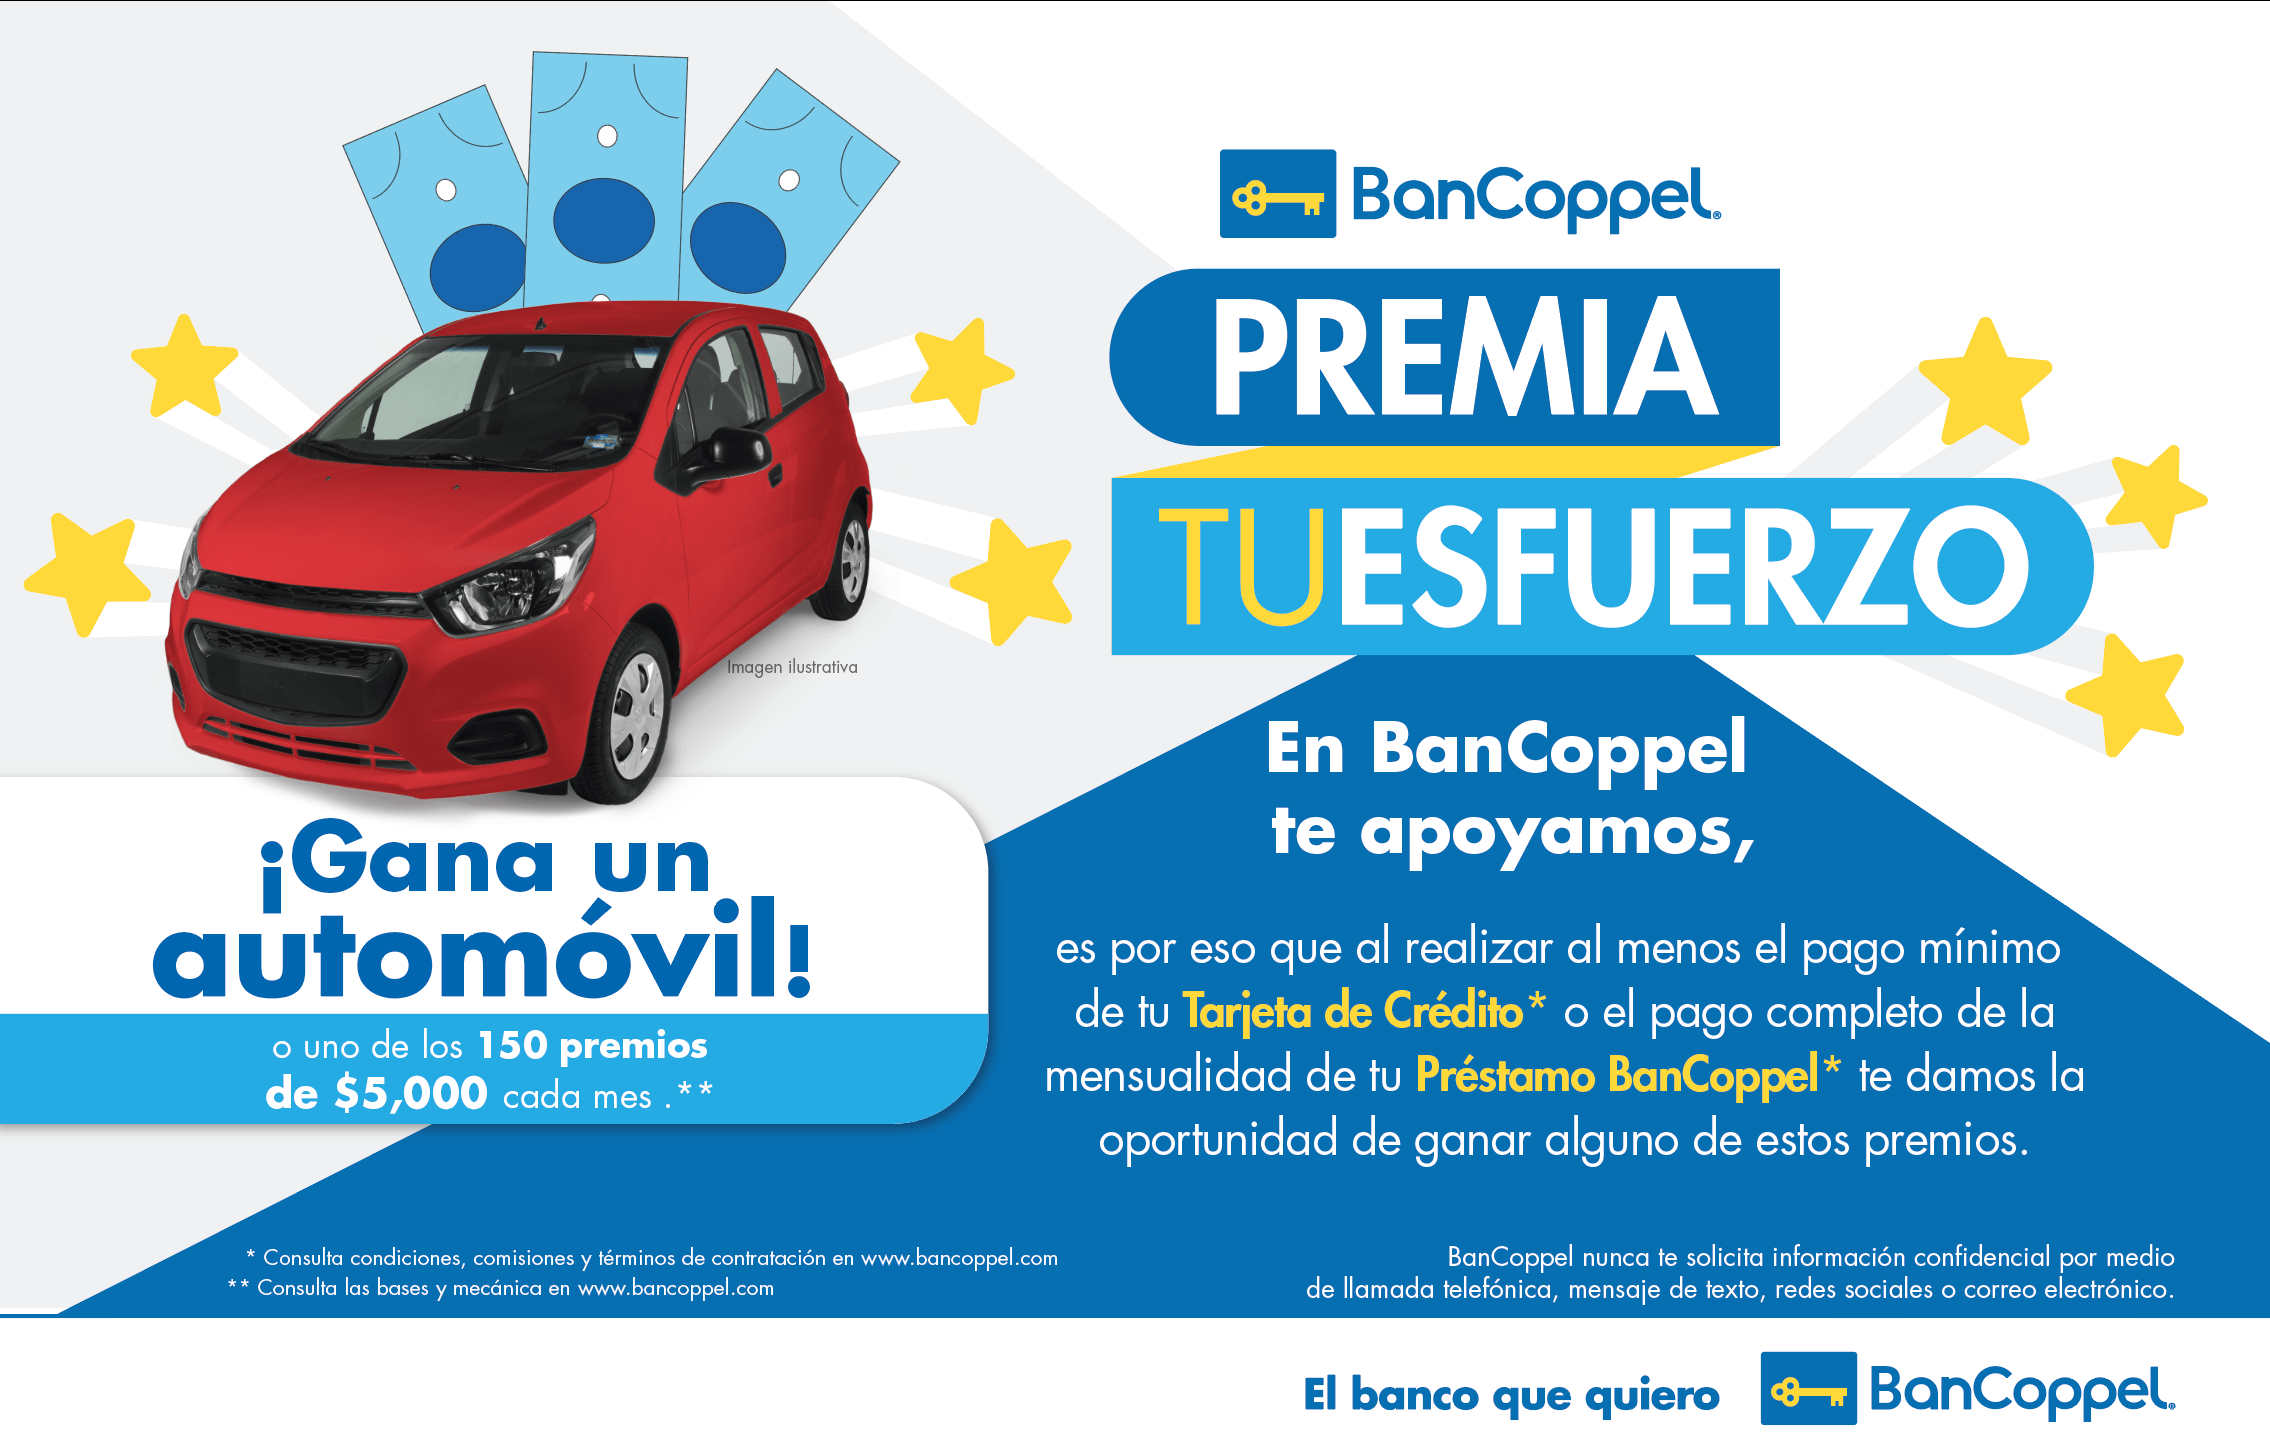 BanCoppel premia tu esfuerzo regala auto cinco mil pesos